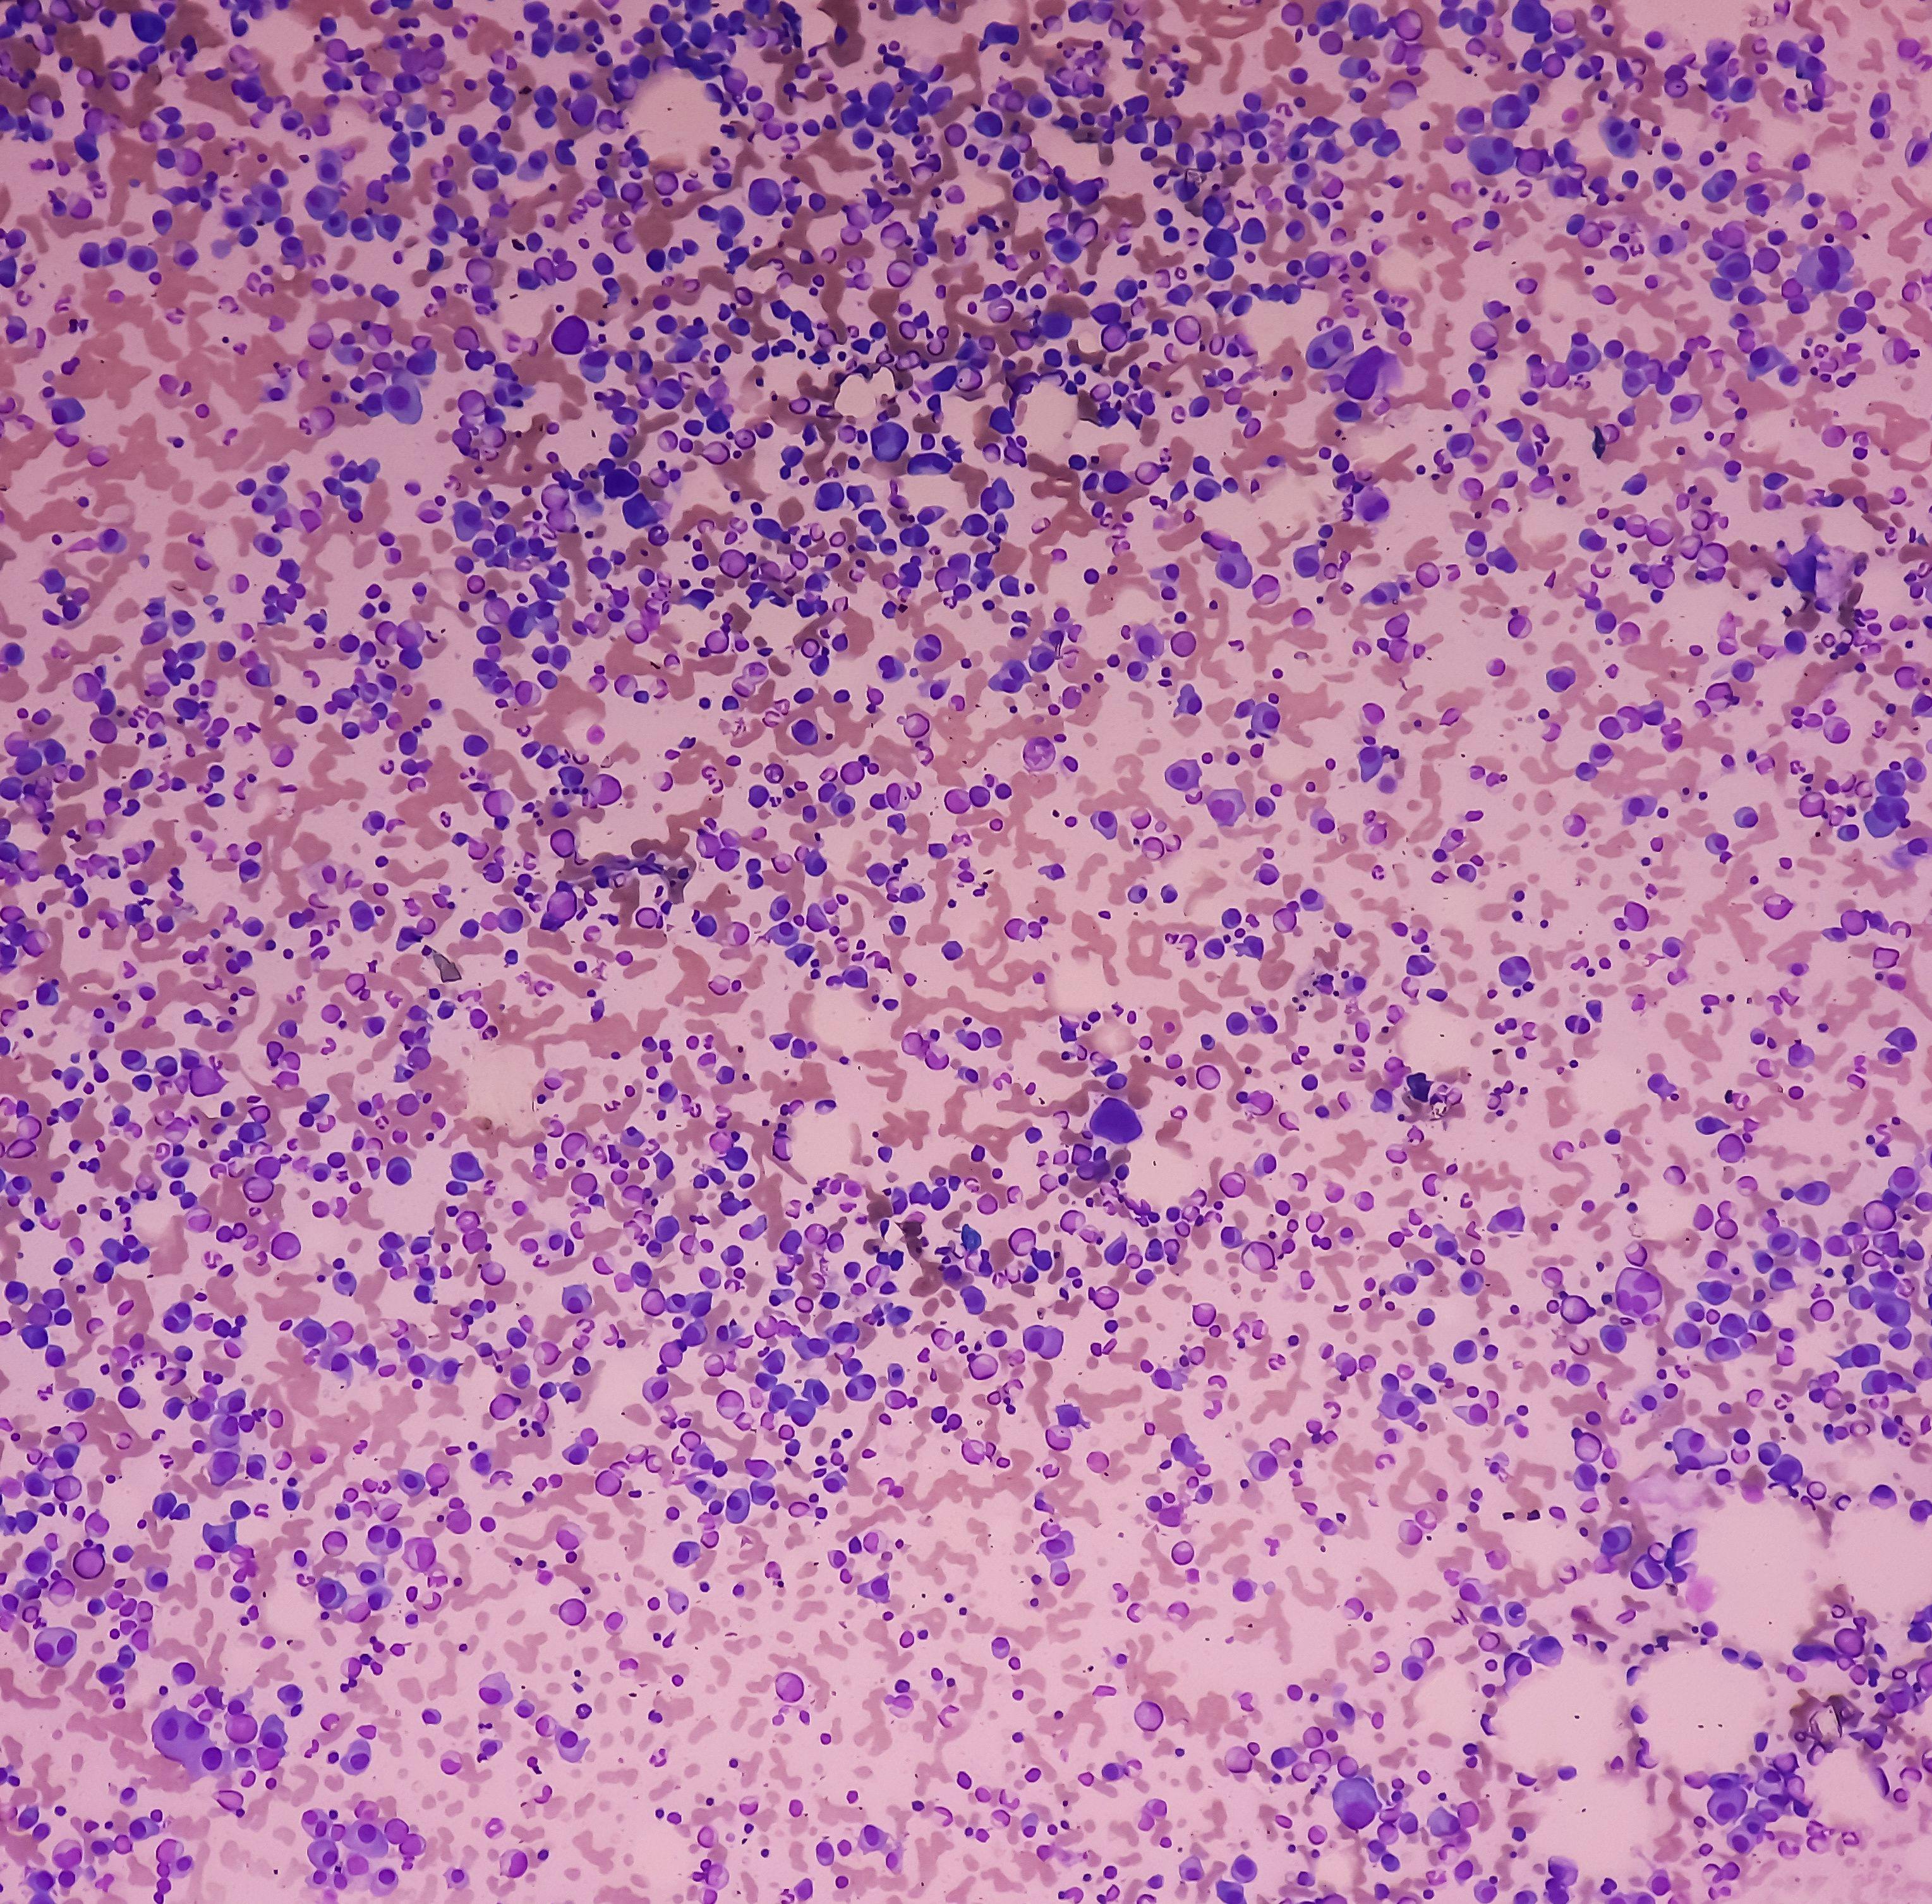 Microscopic image of bone marrow. Plasma cell dyscrasia or Multiple myeloma. A type of bone marrow cancer of malignant plasma cells. Credit: MdBabul - stock.adobe.com 